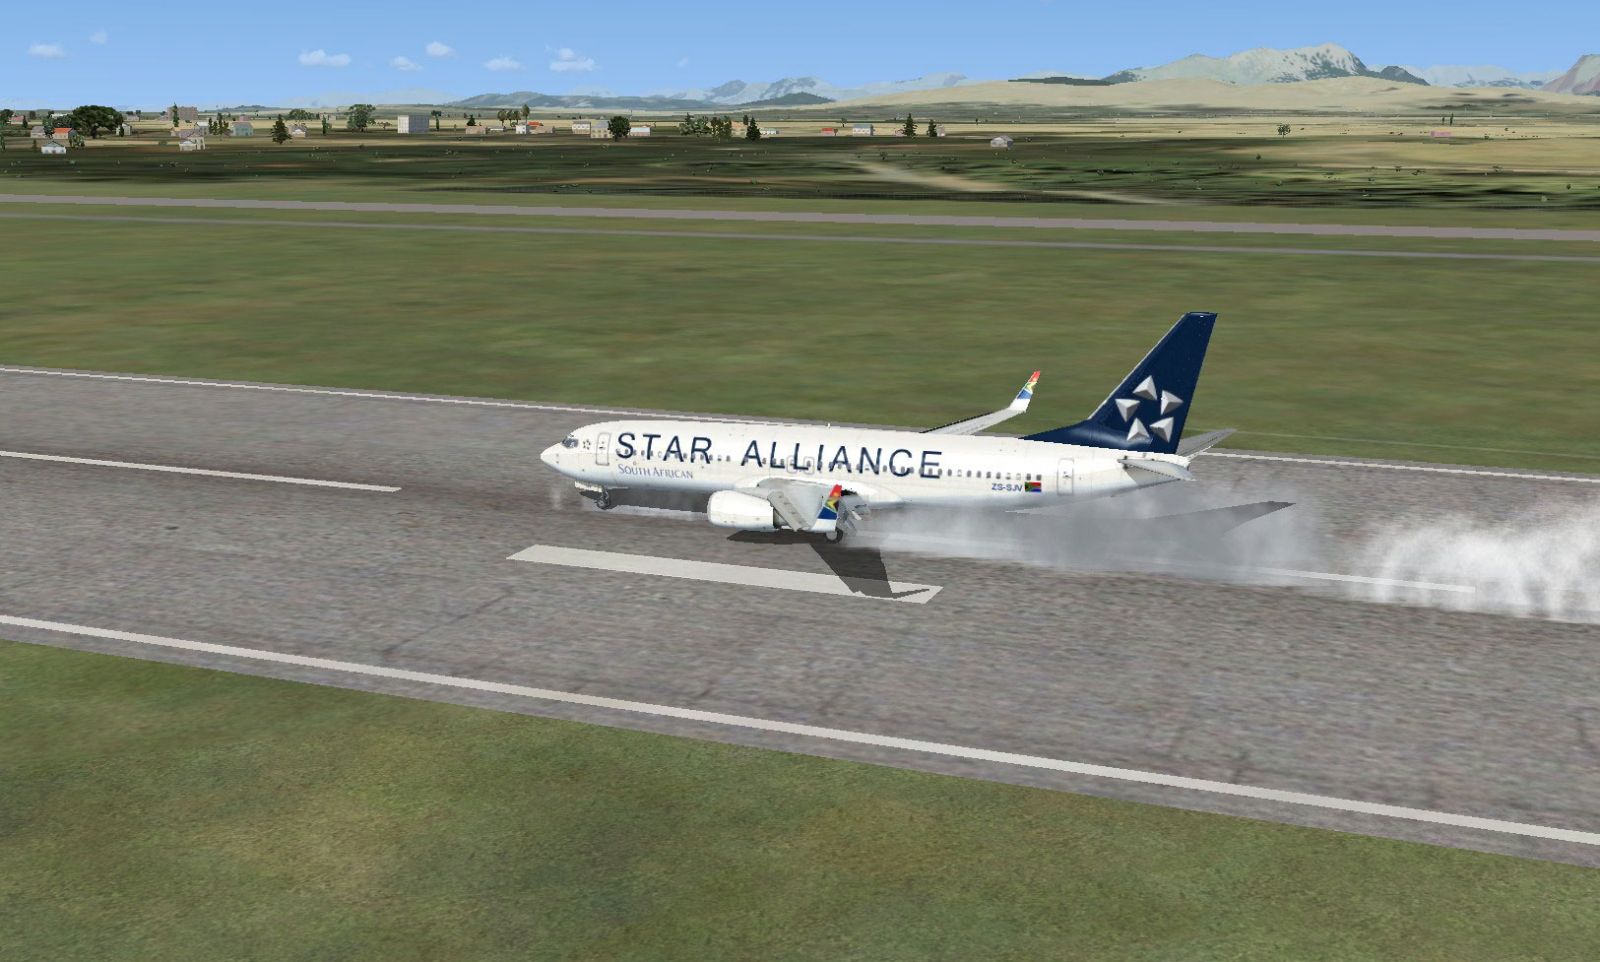 Star Alliance Boeing 737-800 landing on runway.